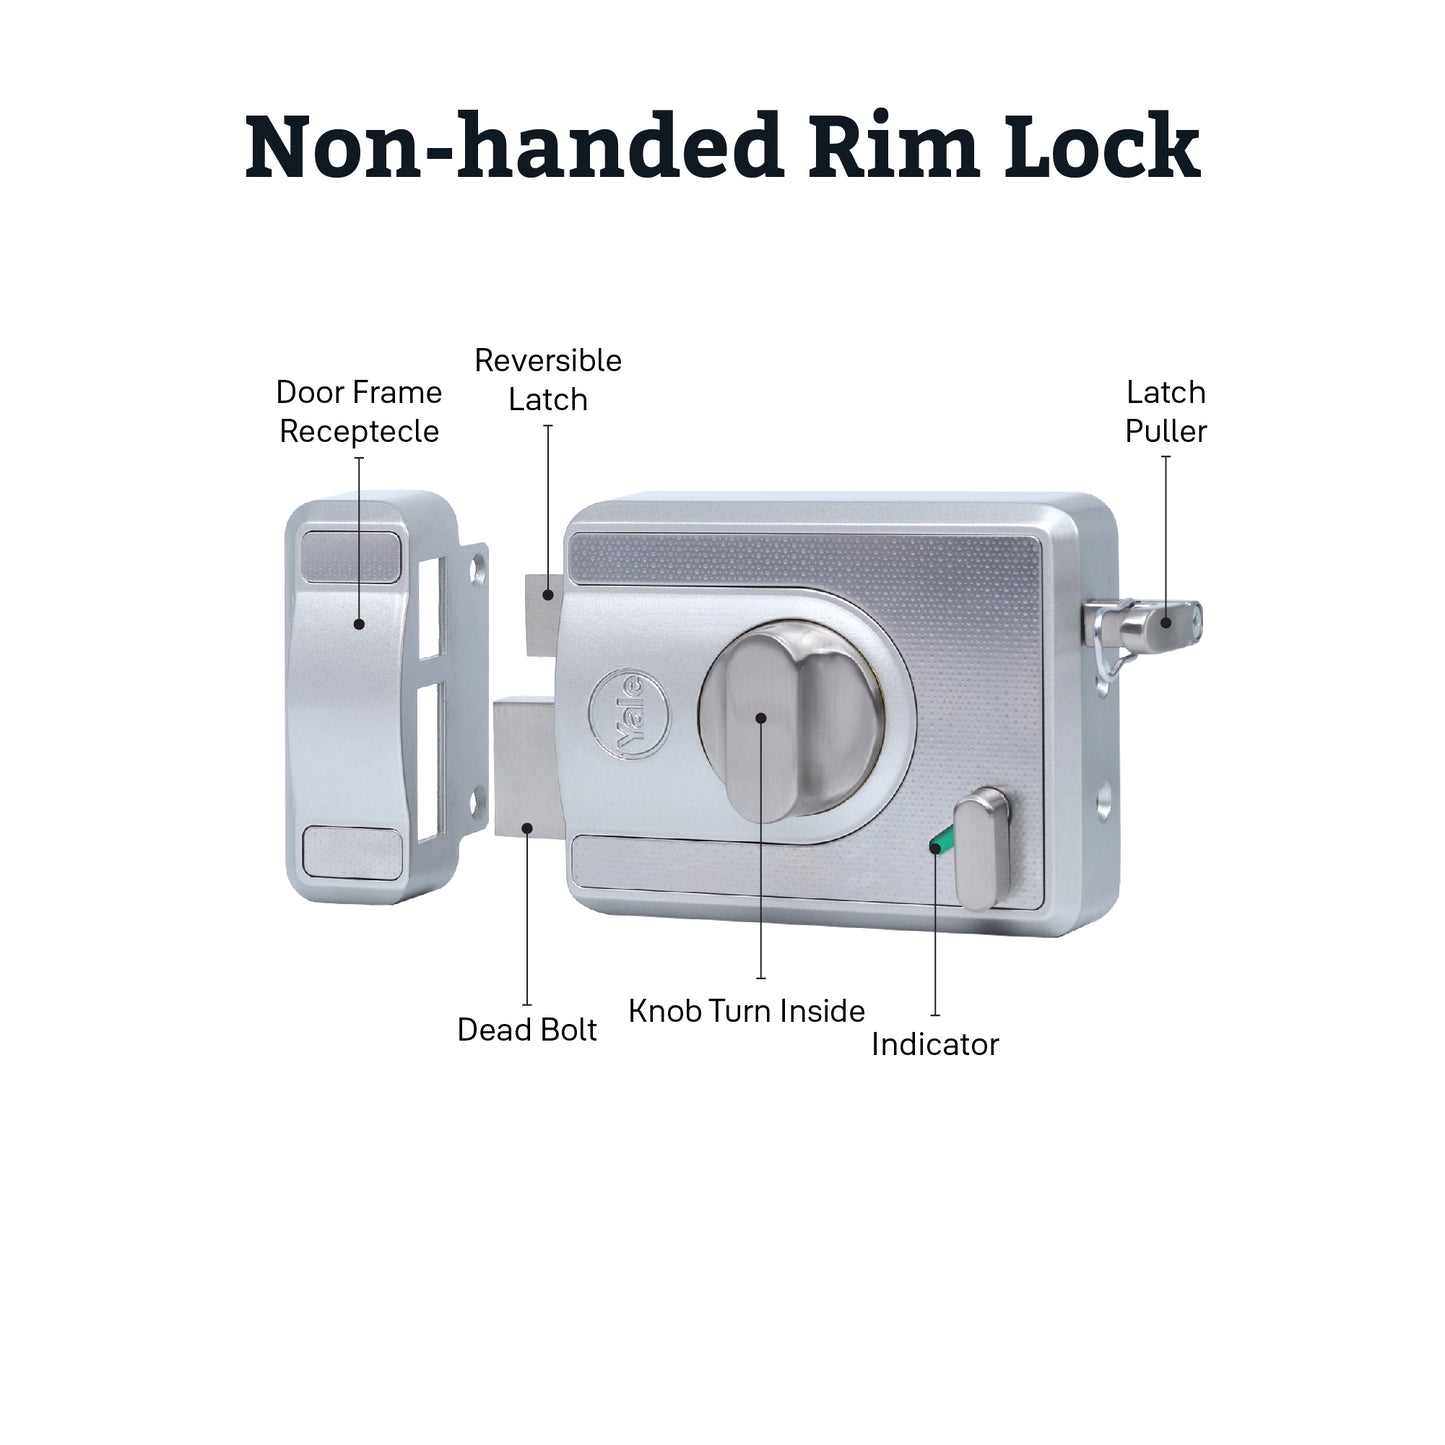 CBS-Cinco Stark Series Premium Rim Main Door Lock , Knob Inside, Silver